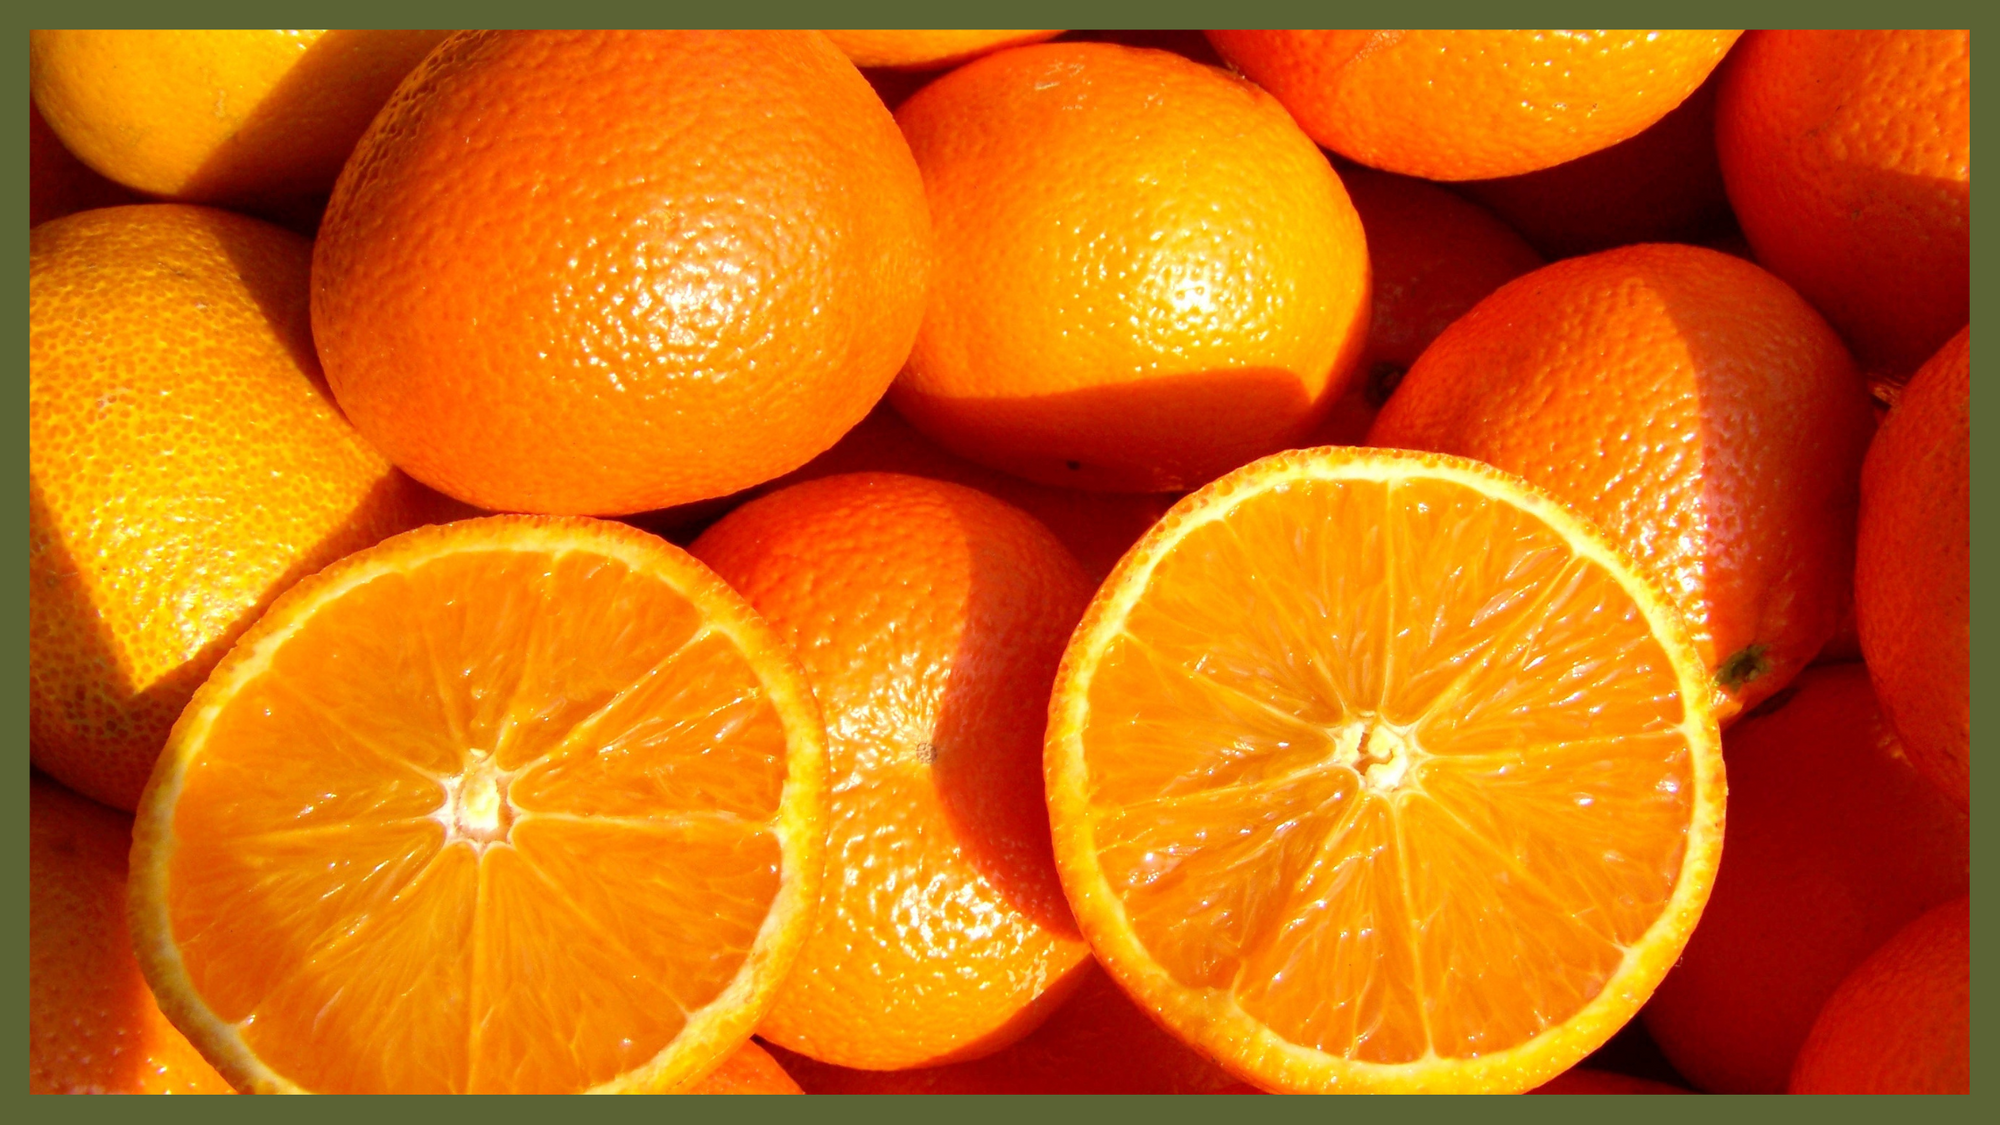 Should dogs eat oranges?